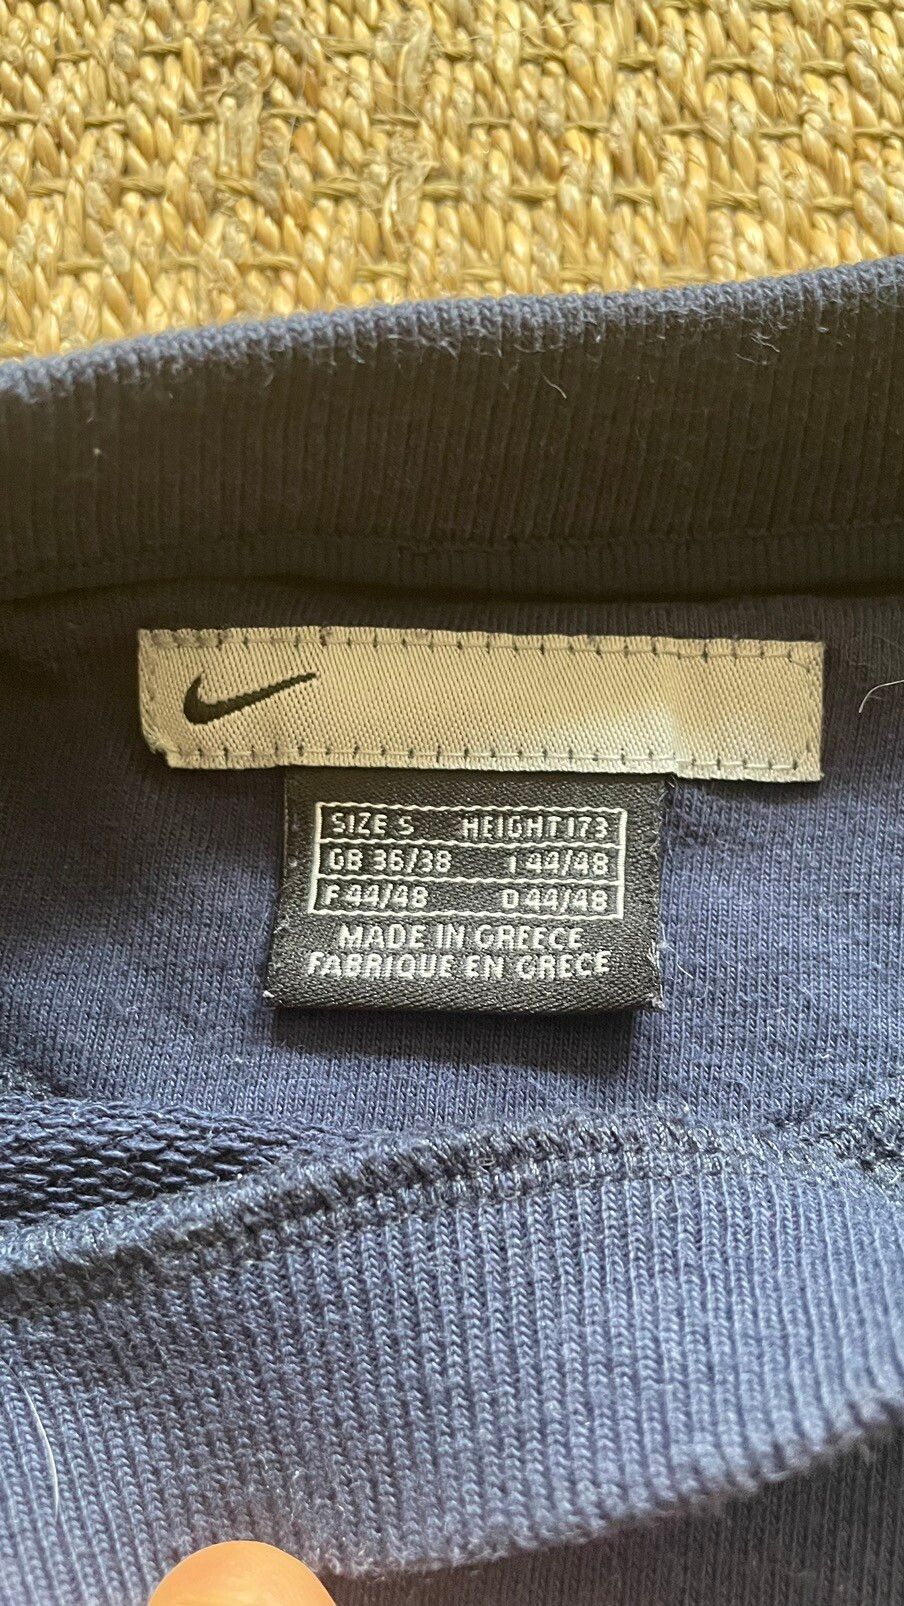 Nike Crewneck Nike Solo Swoosh Vintage Size US S / EU 44-46 / 1 - 4 Thumbnail